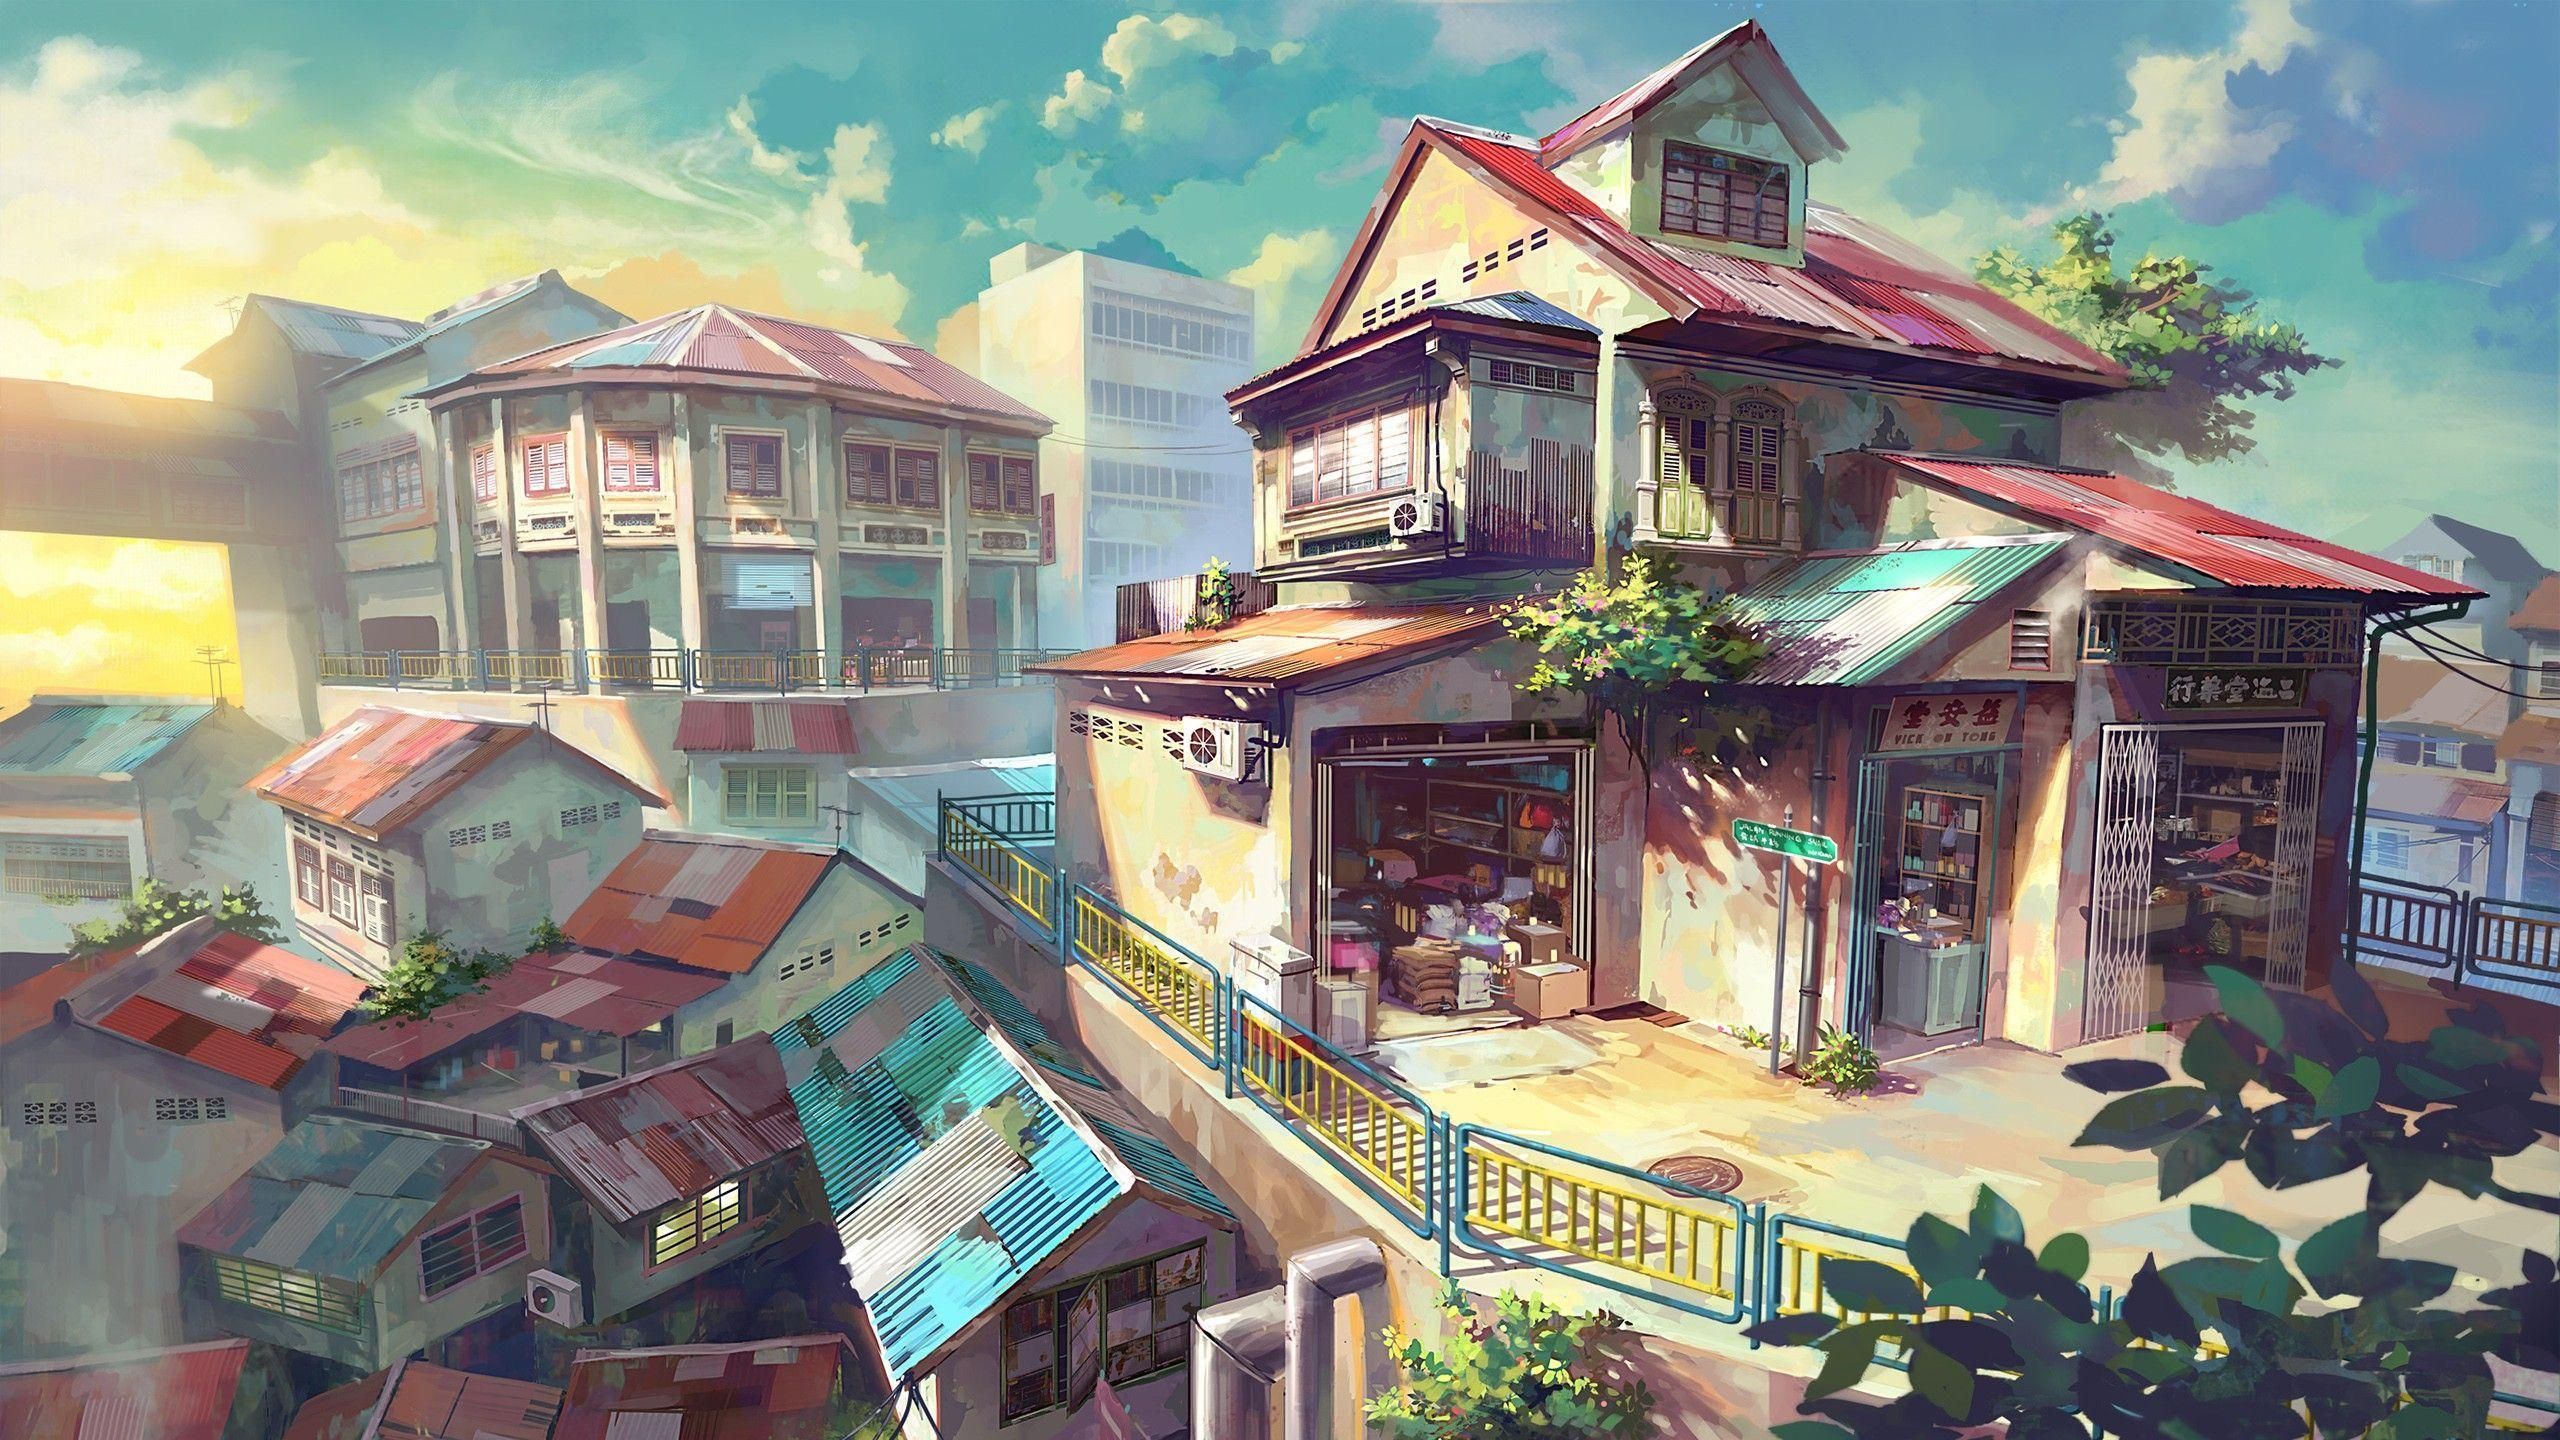 Anime Scenery Wallpaper. Beautiful Anime Scenery Wallpaper. Anime scenery wallpaper, Anime city, Anime scenery